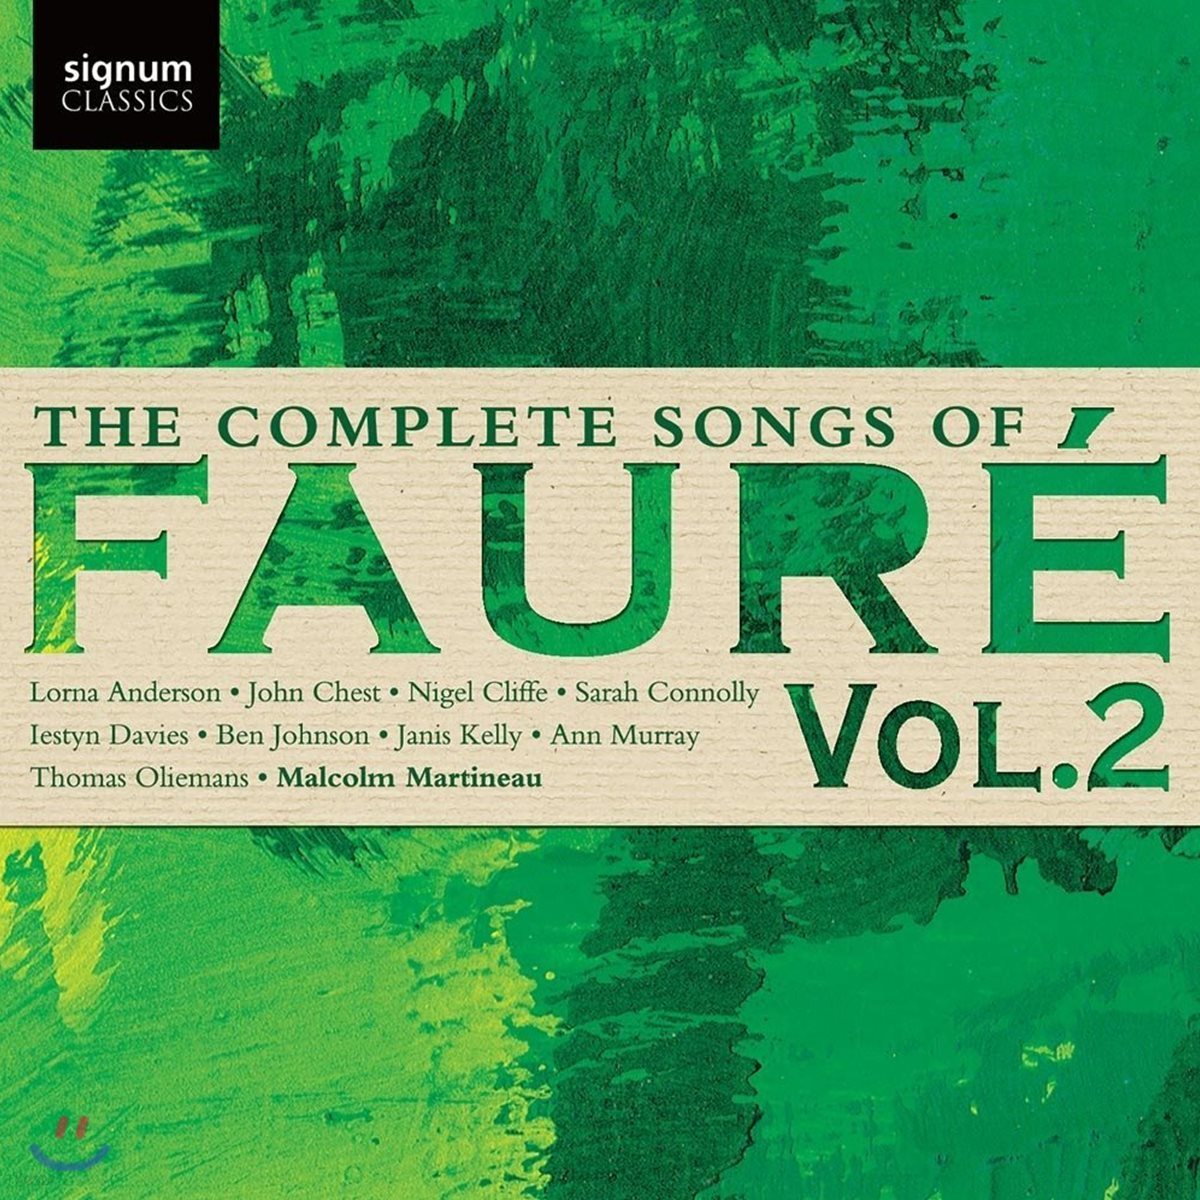 Malcolm Martineau 포레: 가곡 전곡 2집 - 사랑의 꿈, 보칼리즈, 이브의 노래 (Faure: The Complete Songs, Vol. 2 - Reve d'Amour, Vocalise, La Chanson d'Eve) 말콤 마르티노, 앤 머레이, 벤 존슨